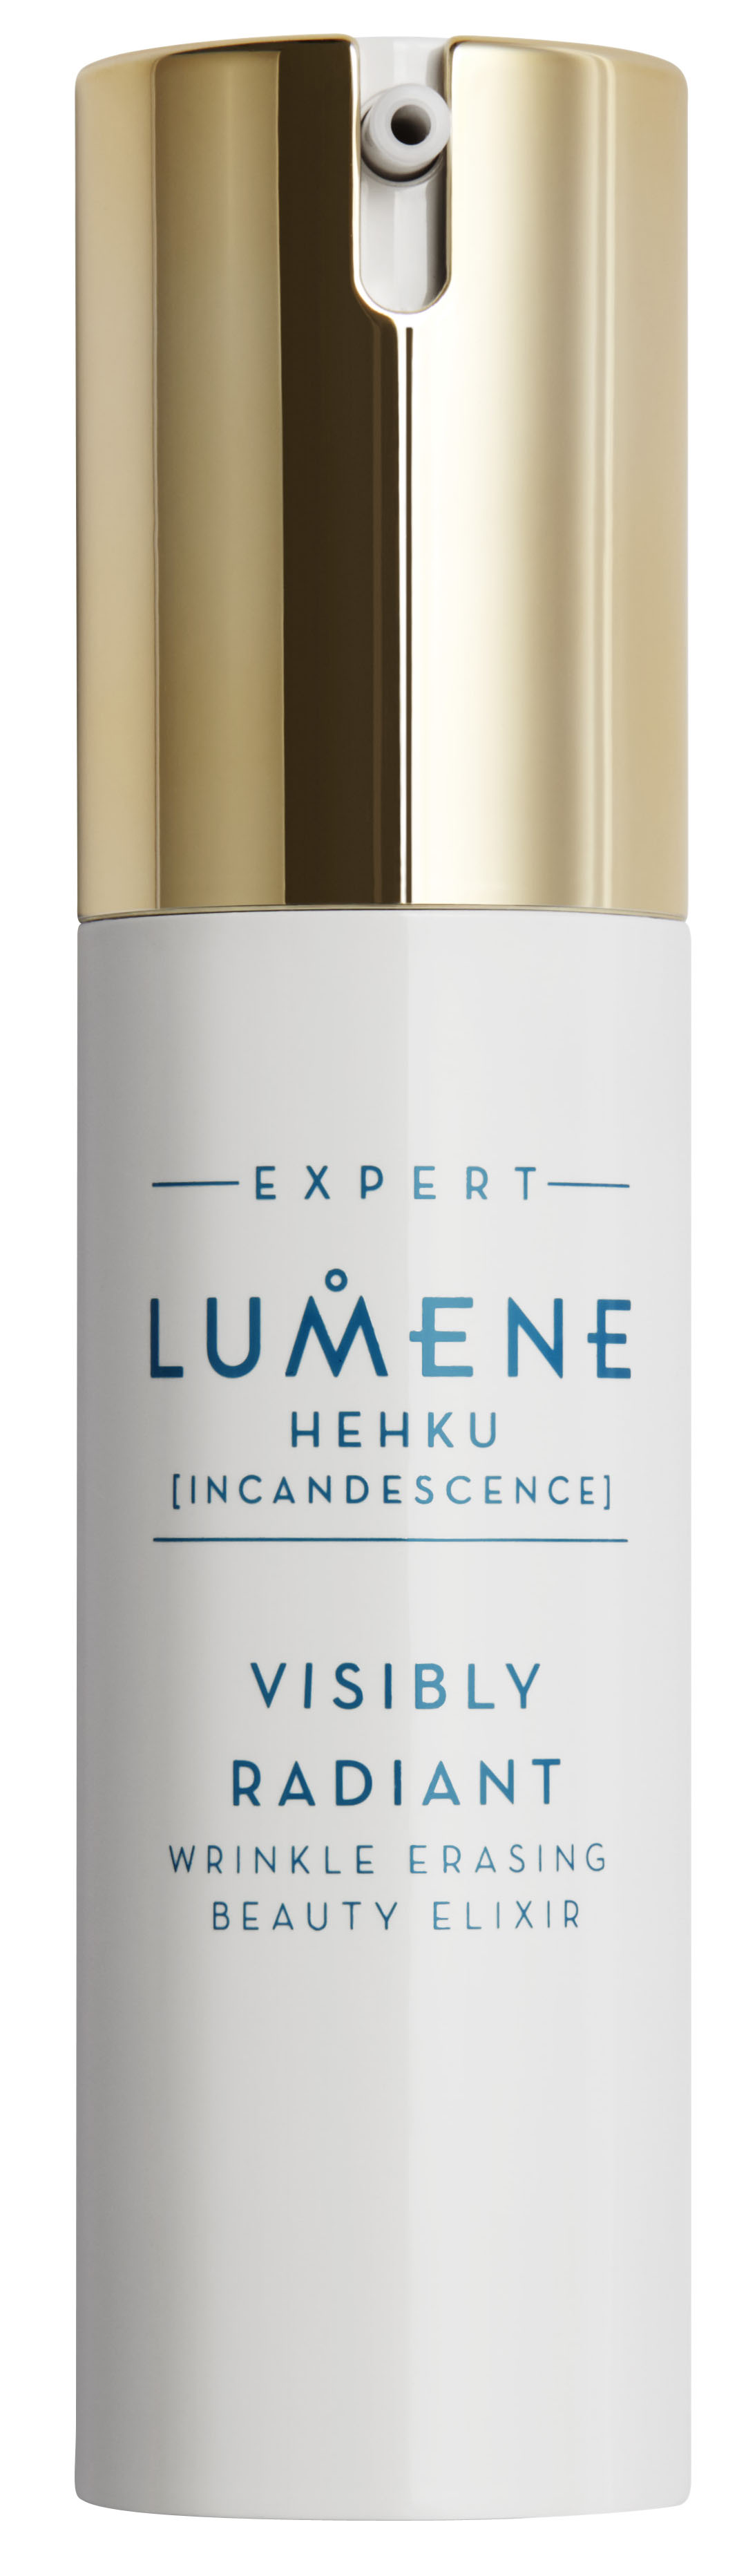 Lumene Hehku Восстанавливающий эликсир, возвращающий сияние и сокращающий морщины, 30 мл